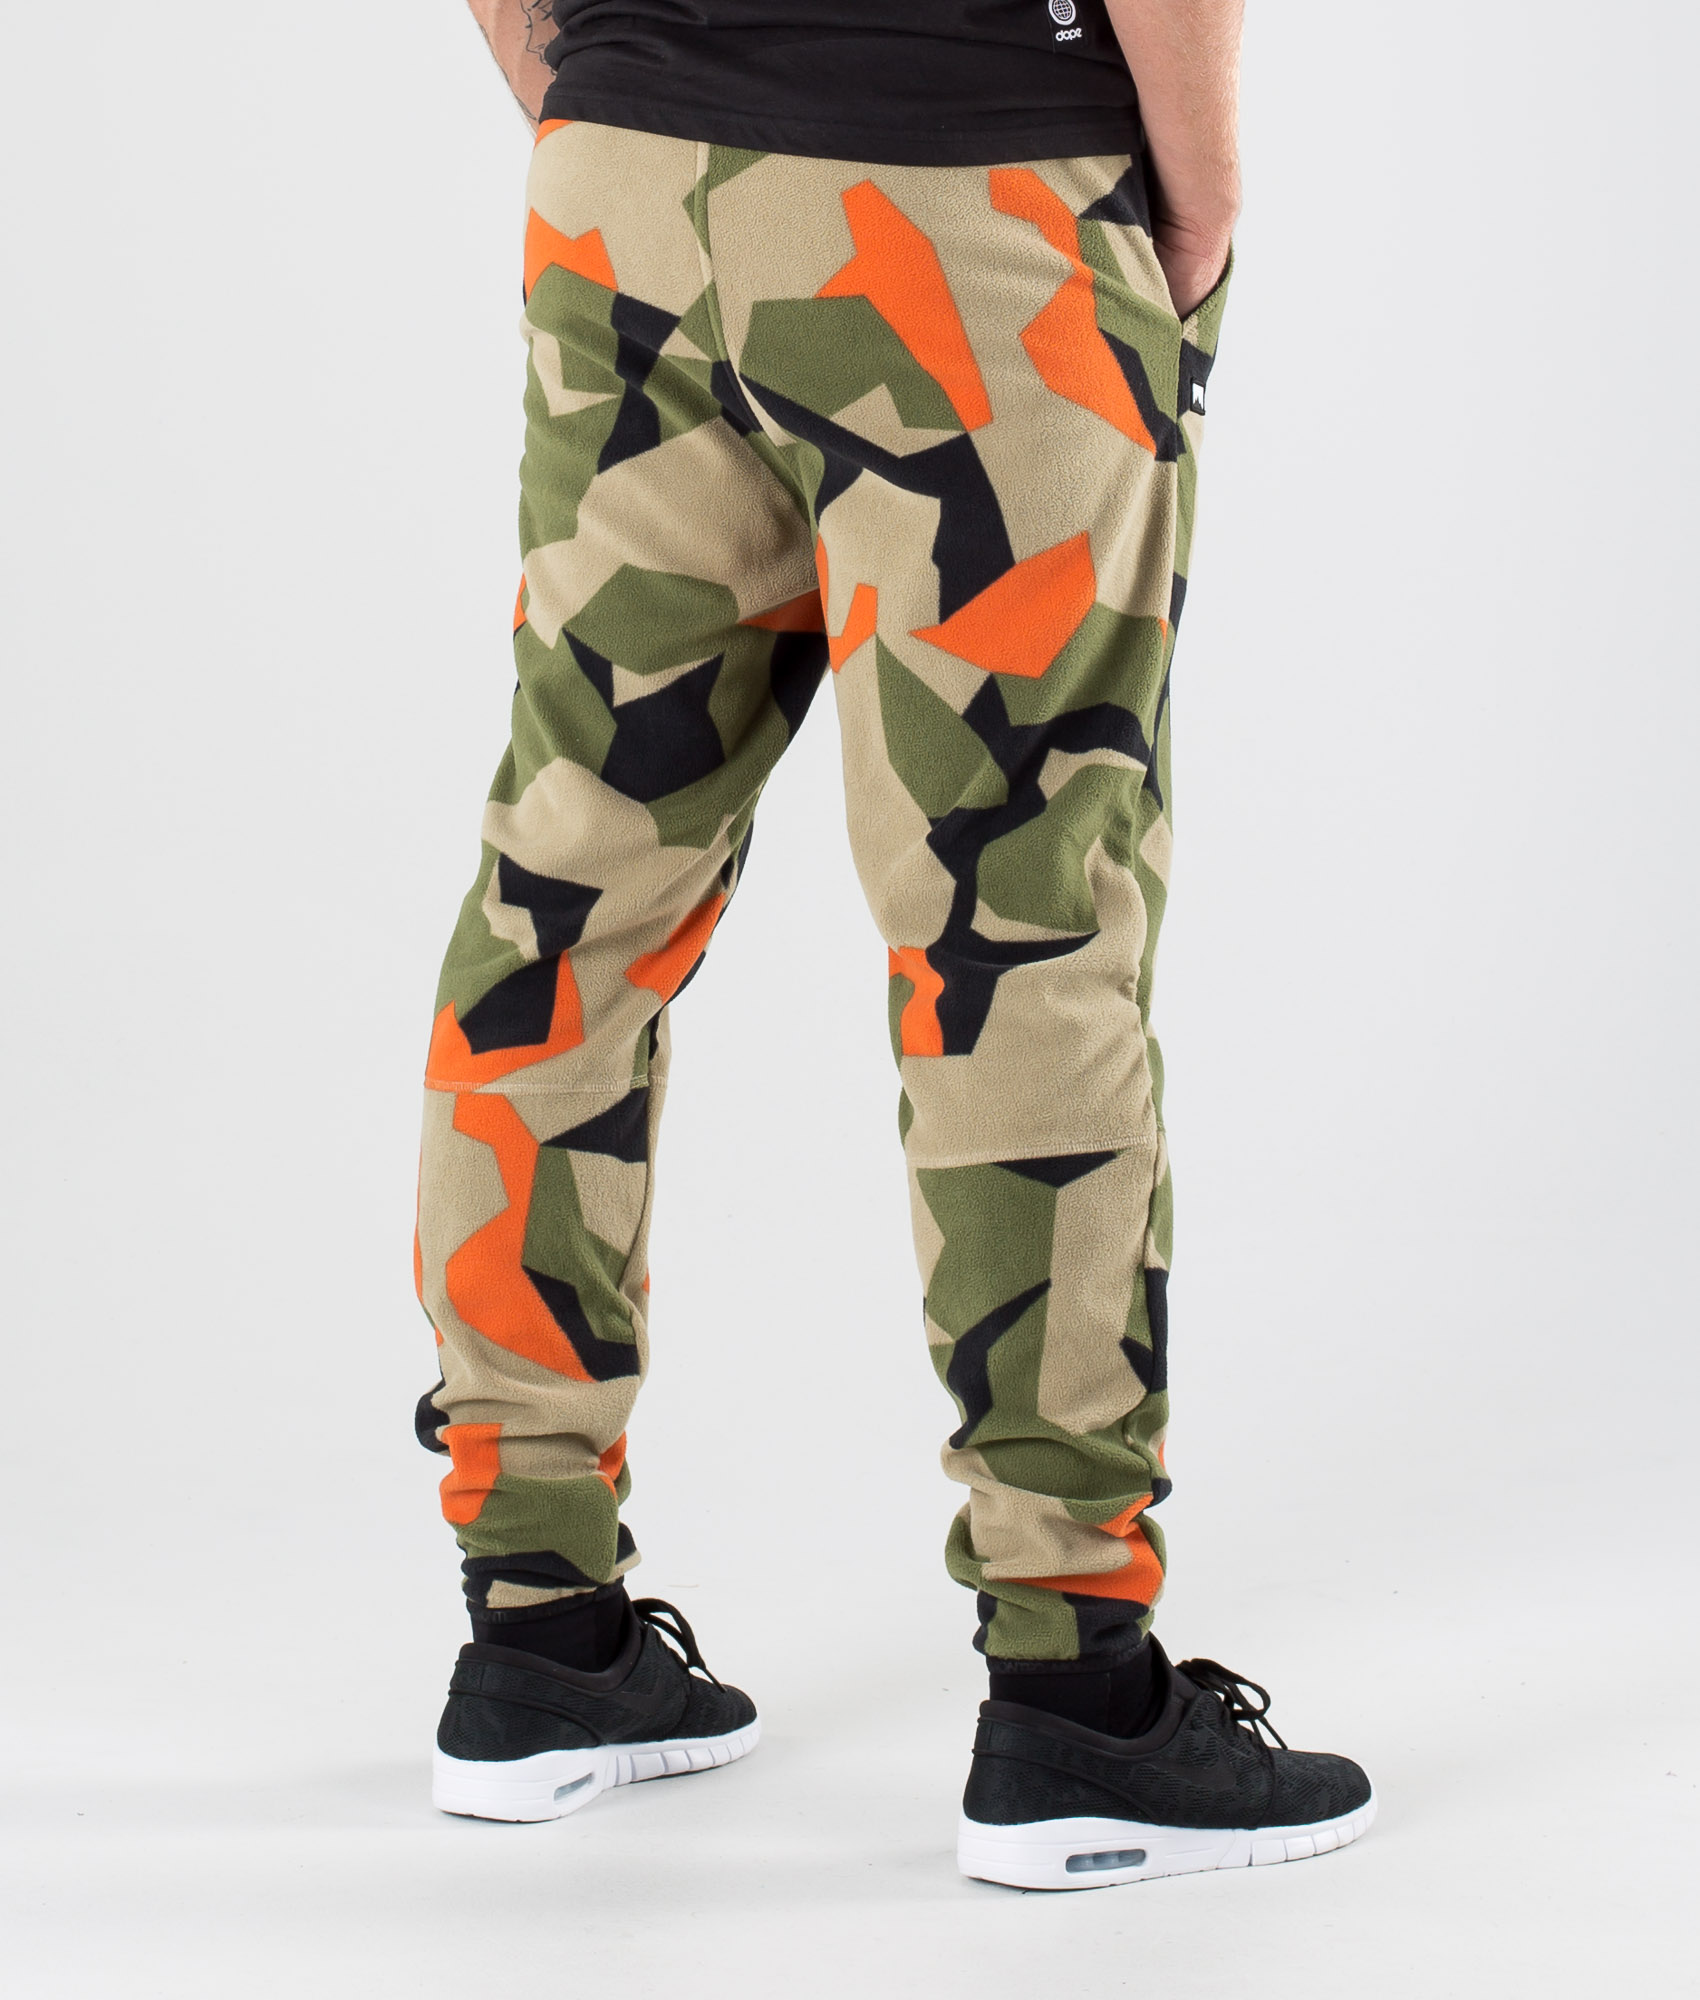 Unisex Mens Womens Hip Hop Camo Cargo Joggers Pants With Pockets  Orange   CD188IRUXNE  Ropa Ropa tumblr Pantalones